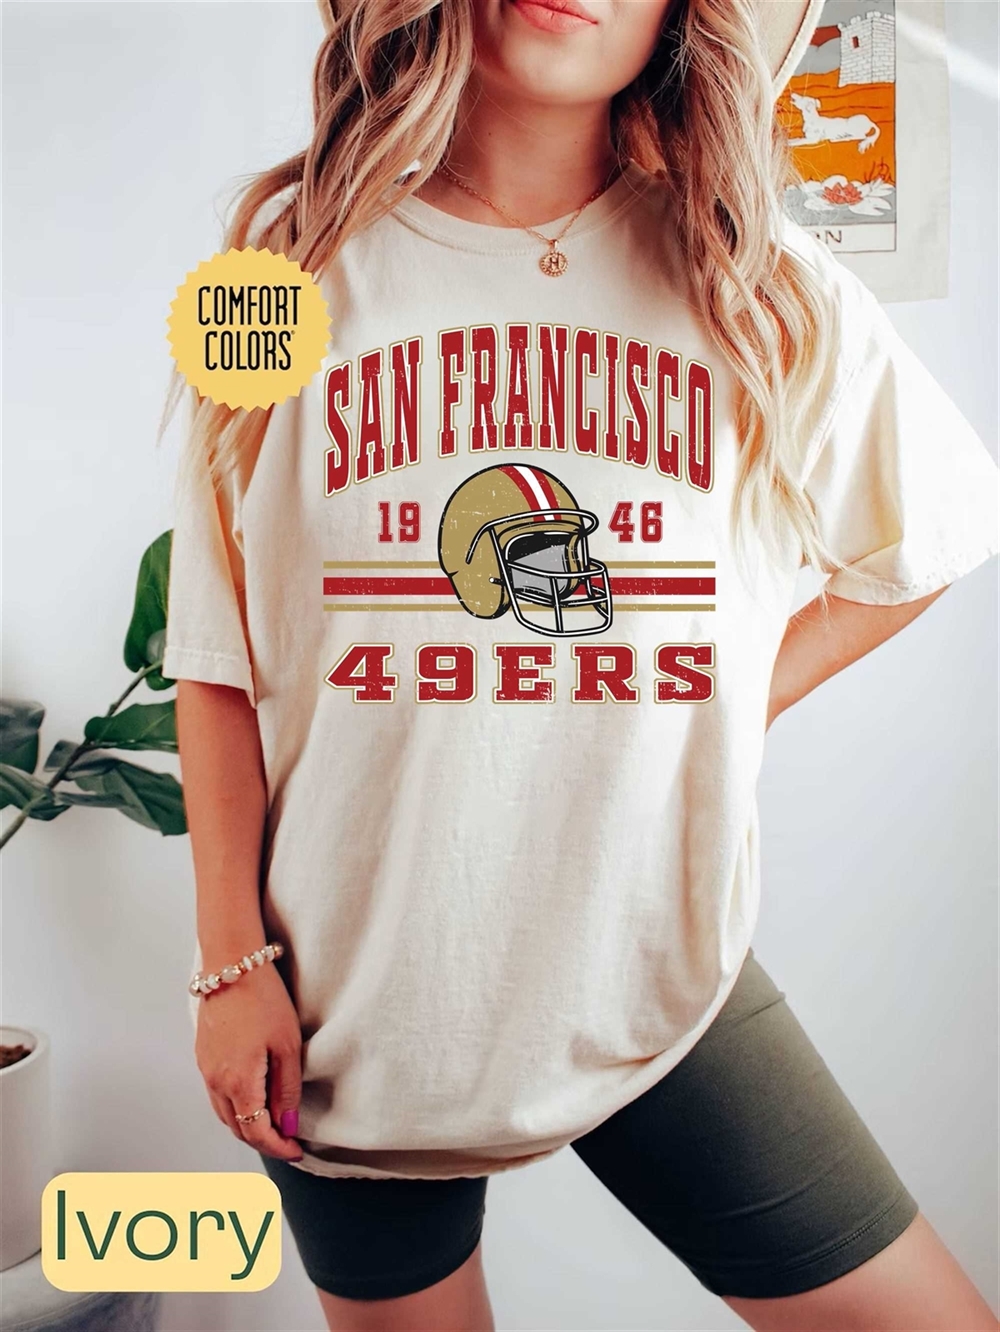 San Francisco Football Comfort Colors Shirt Trendy Vintage Retro 80s Style Football Tshirt